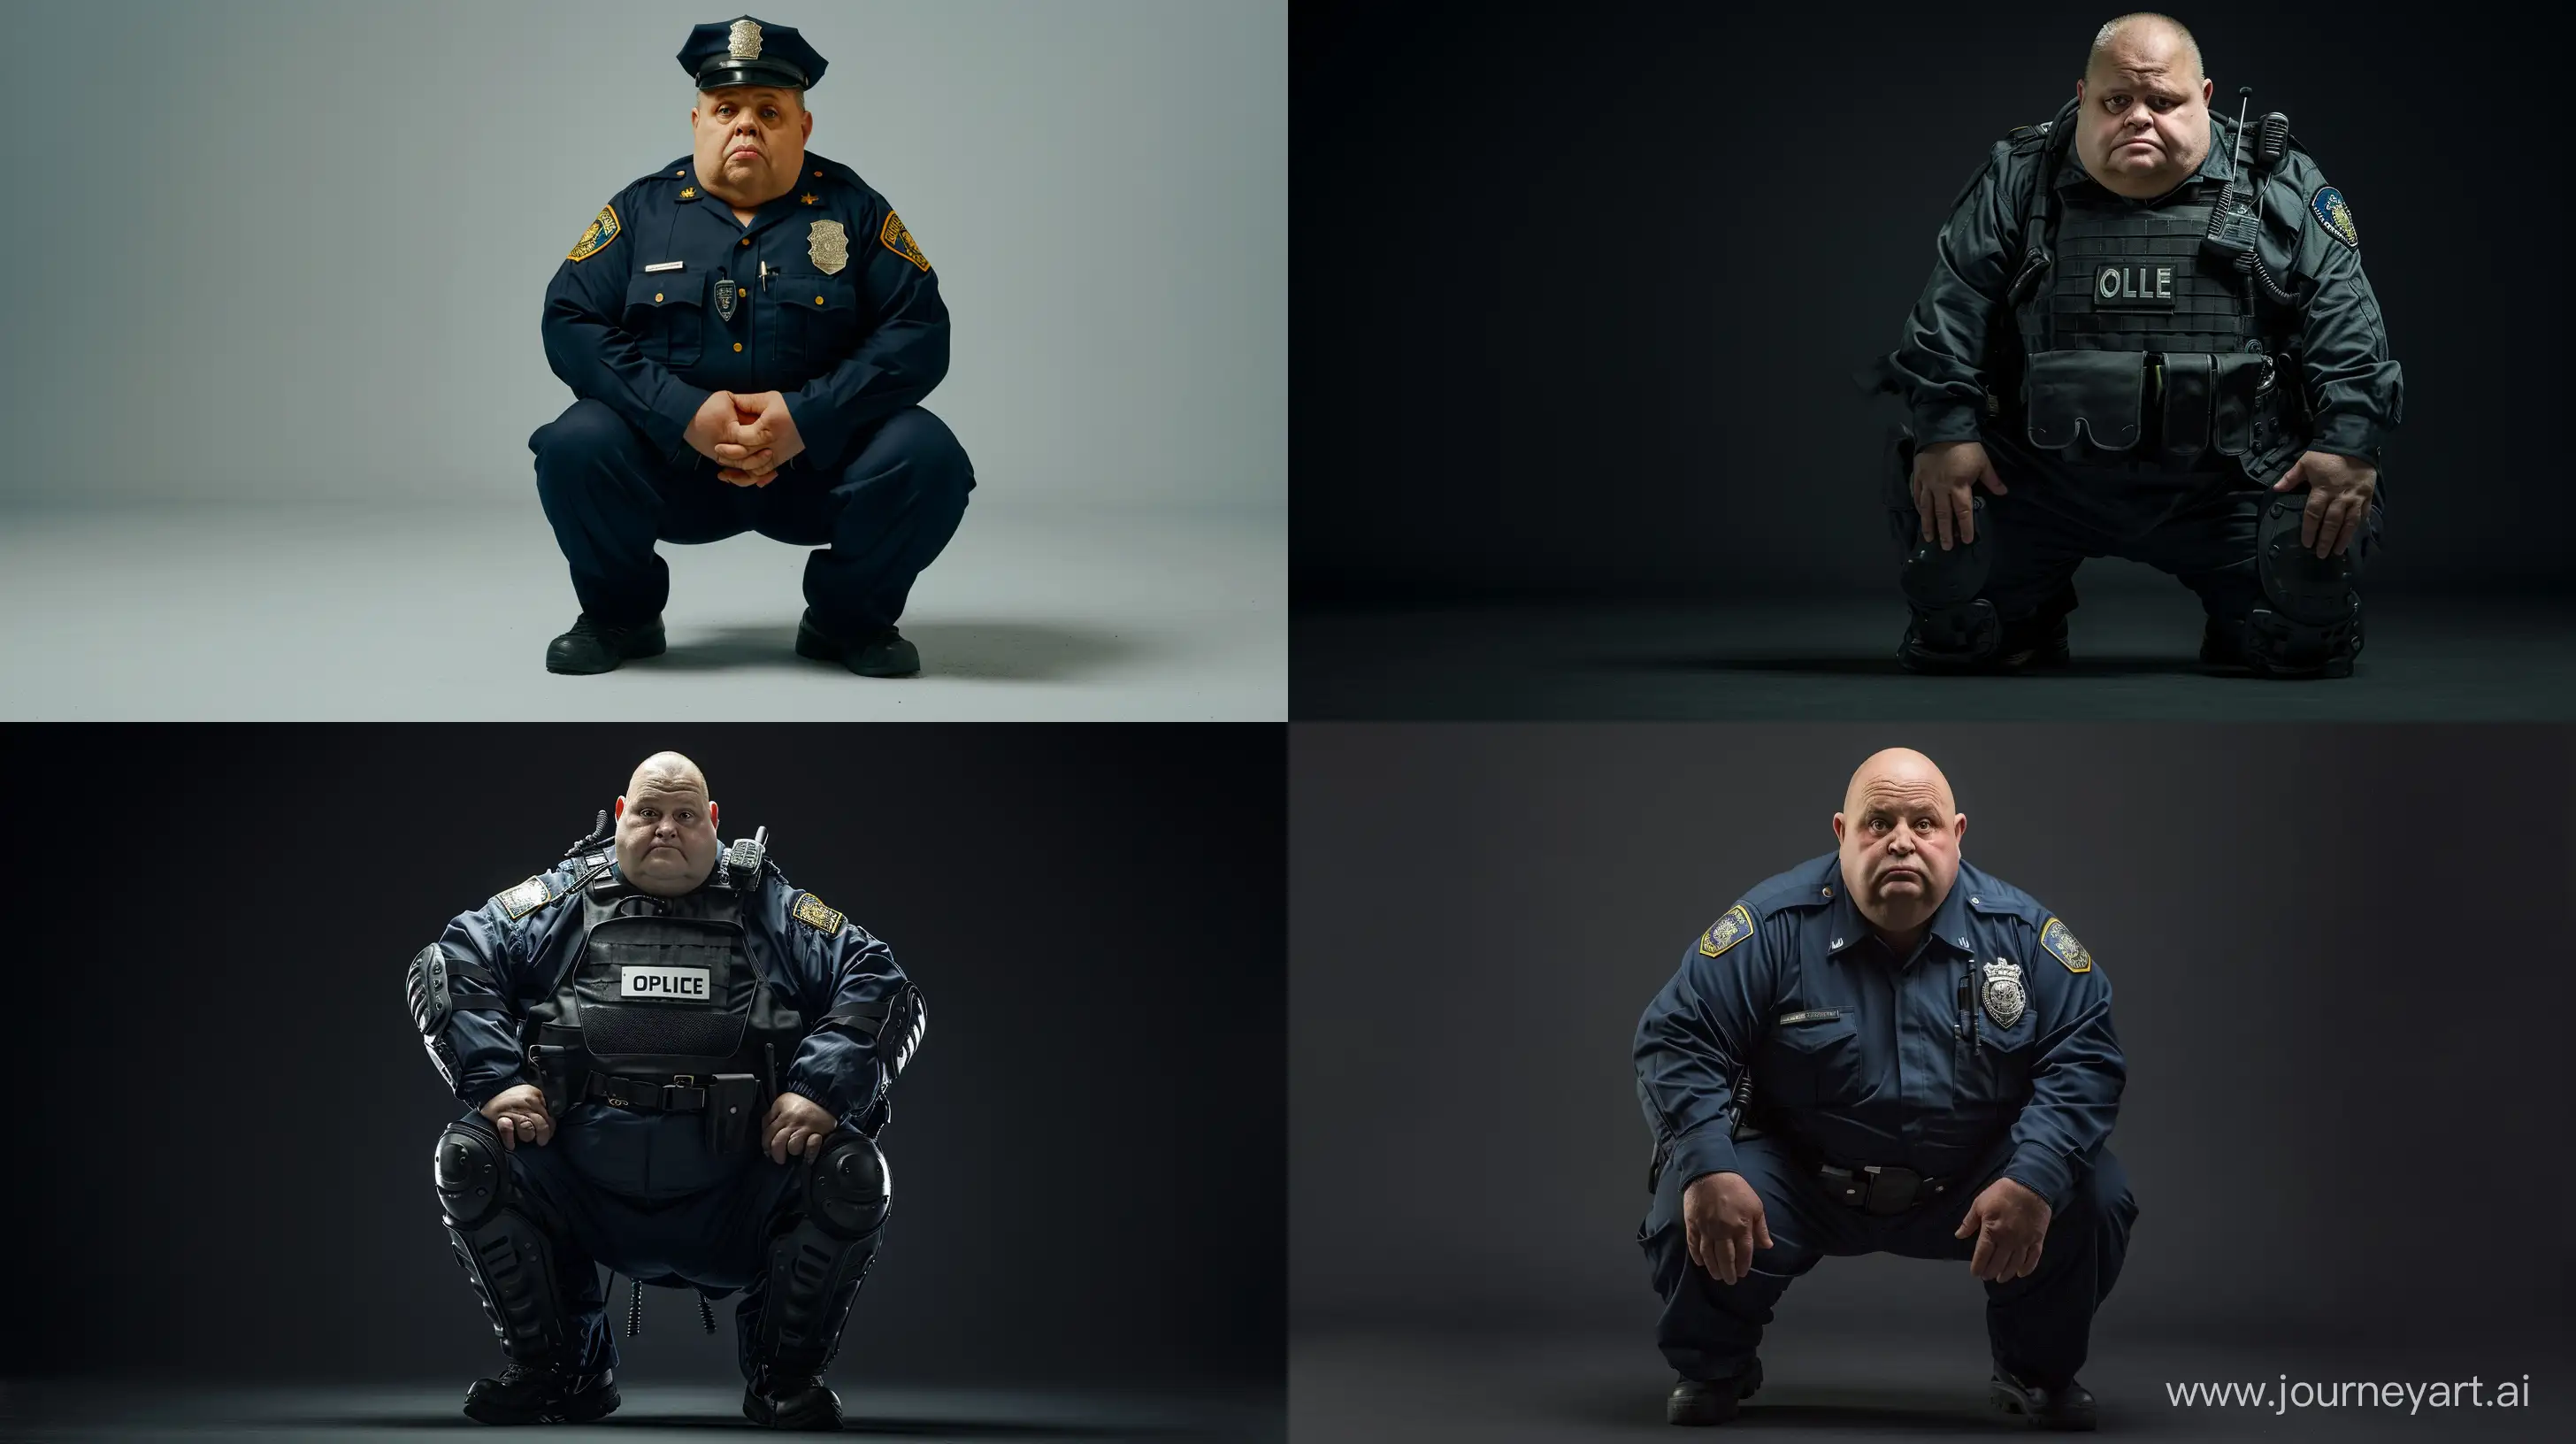 Senior-Police-Officer-Kneeling-in-Uniform